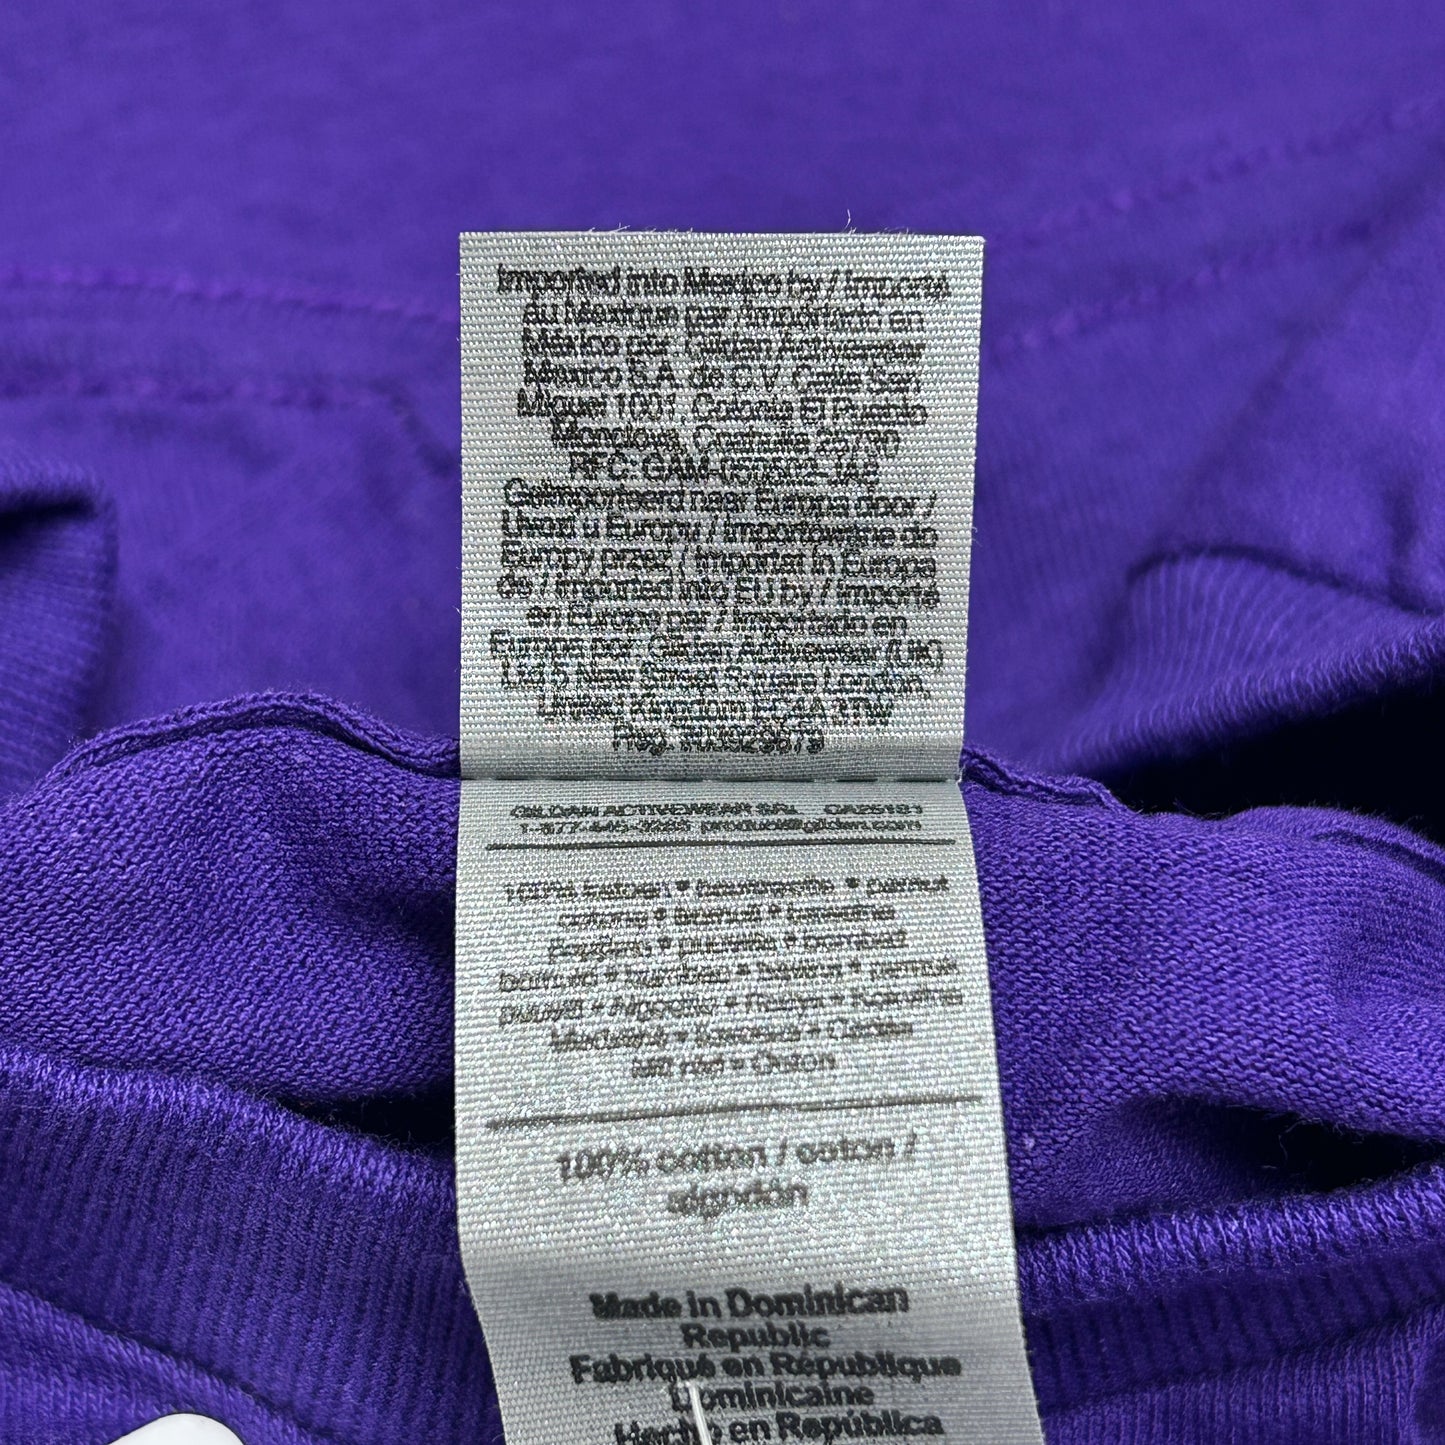 GILDAN College of the Holy Cross Heritage T-Shirt Cotton Unisex Sz Medium Purple (New)